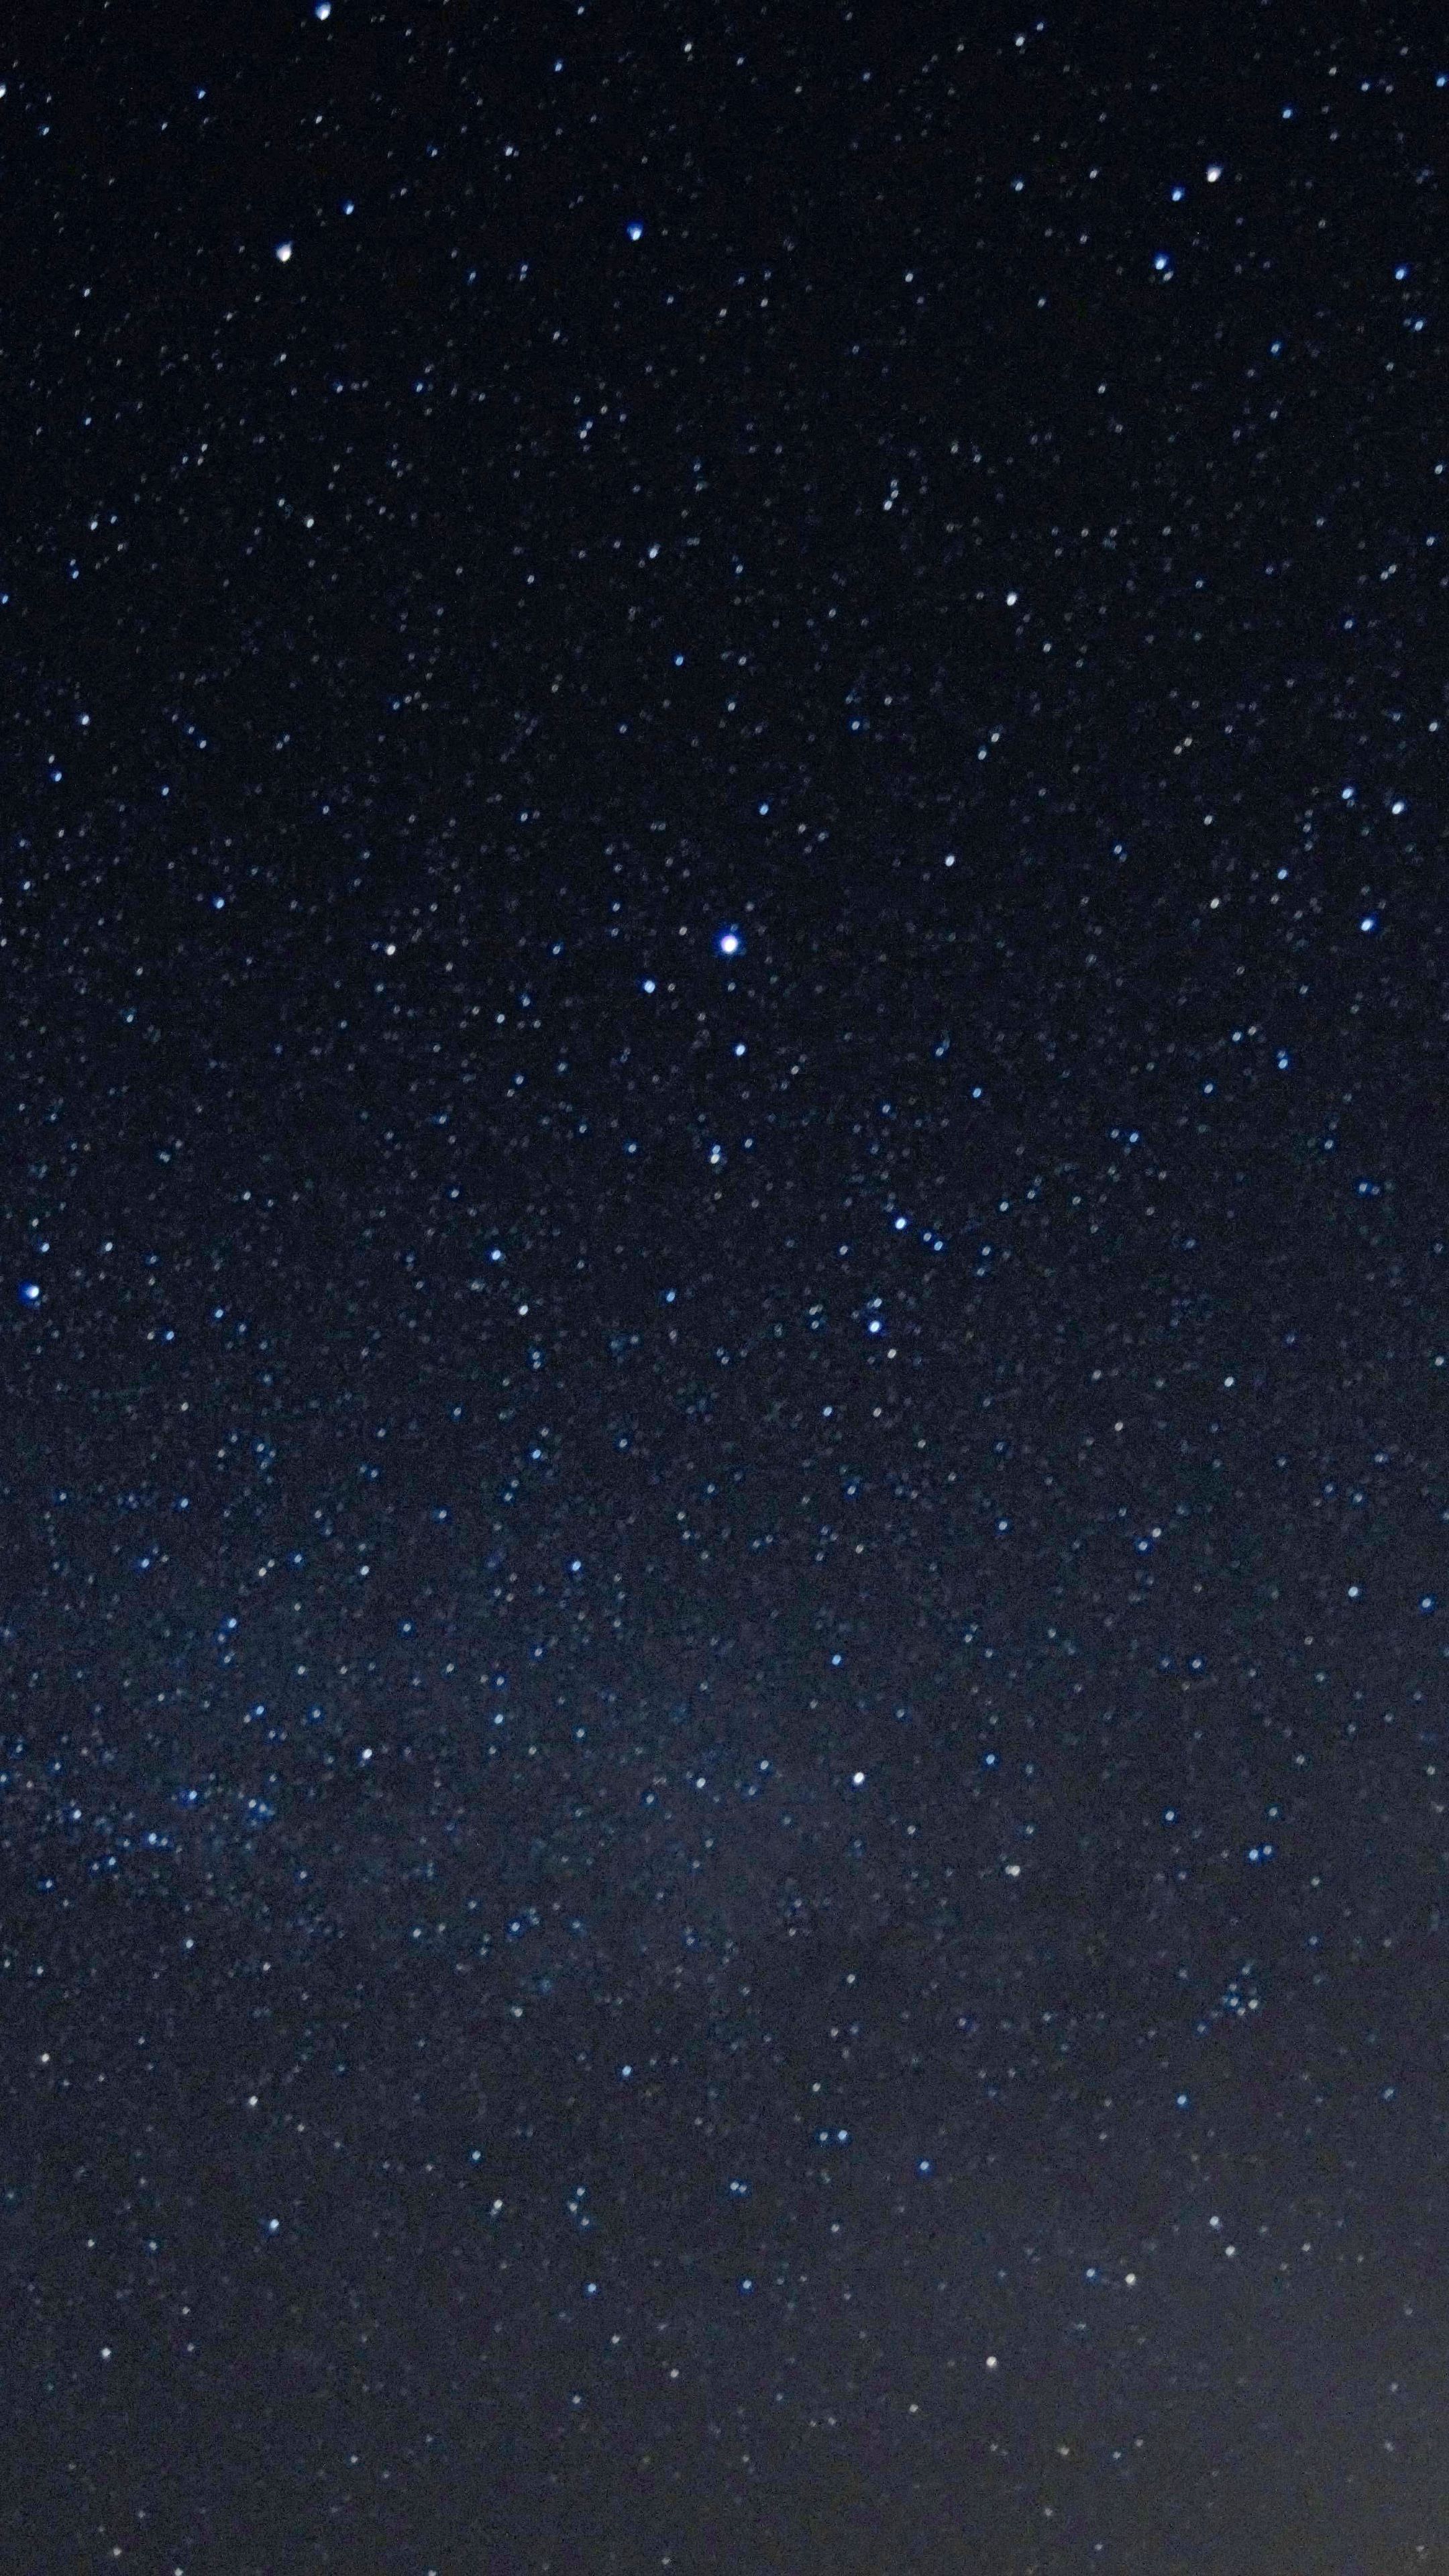 Sky #starrysky #night #stars #wallpaper HD 4k background for android :). Star wallpaper, Sky, Night skies